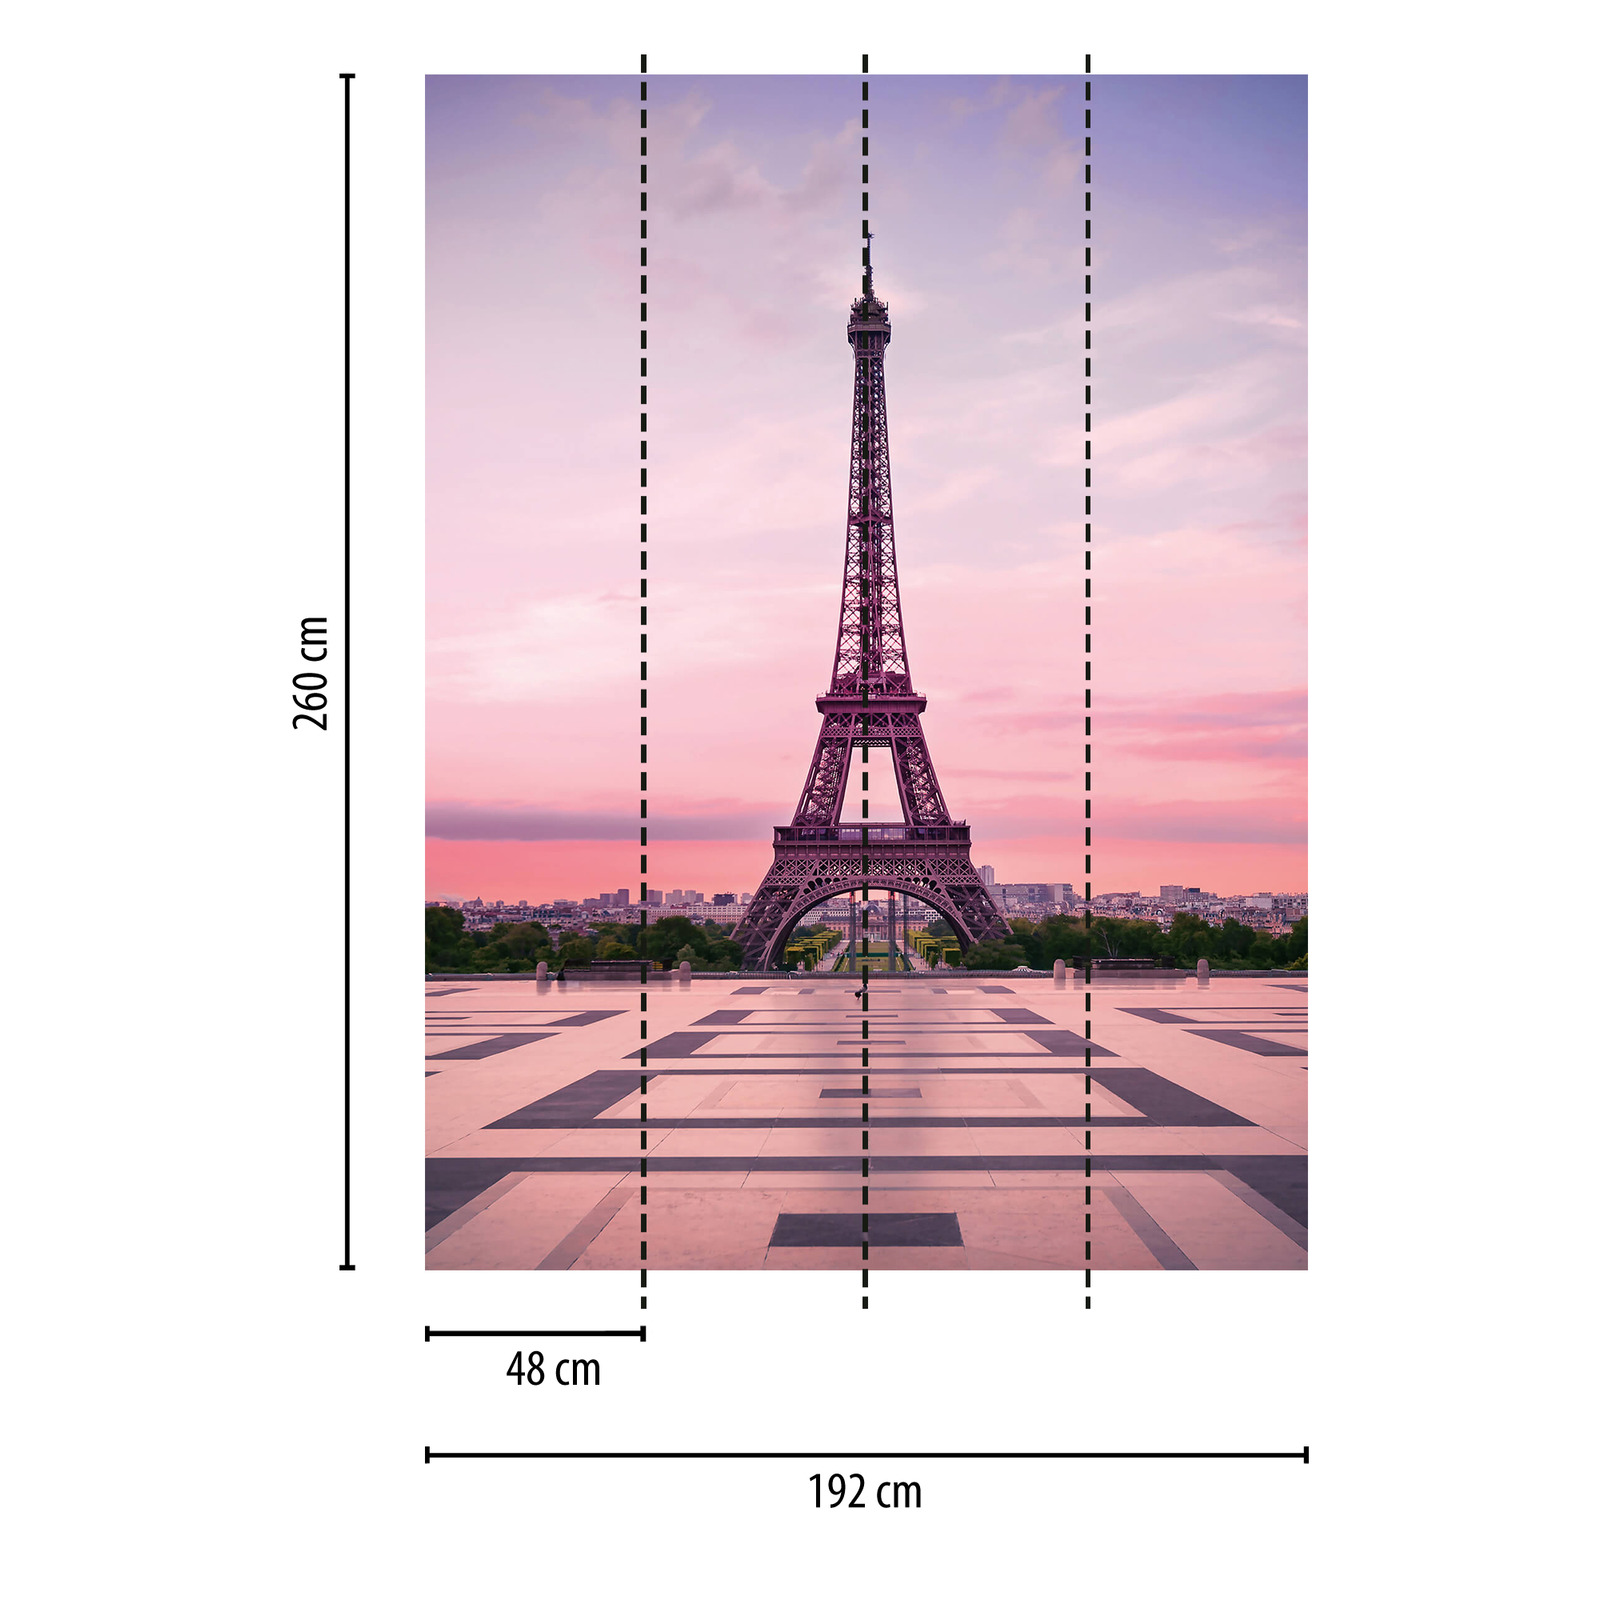             Eiffel Tower mural Paris at sunset
        